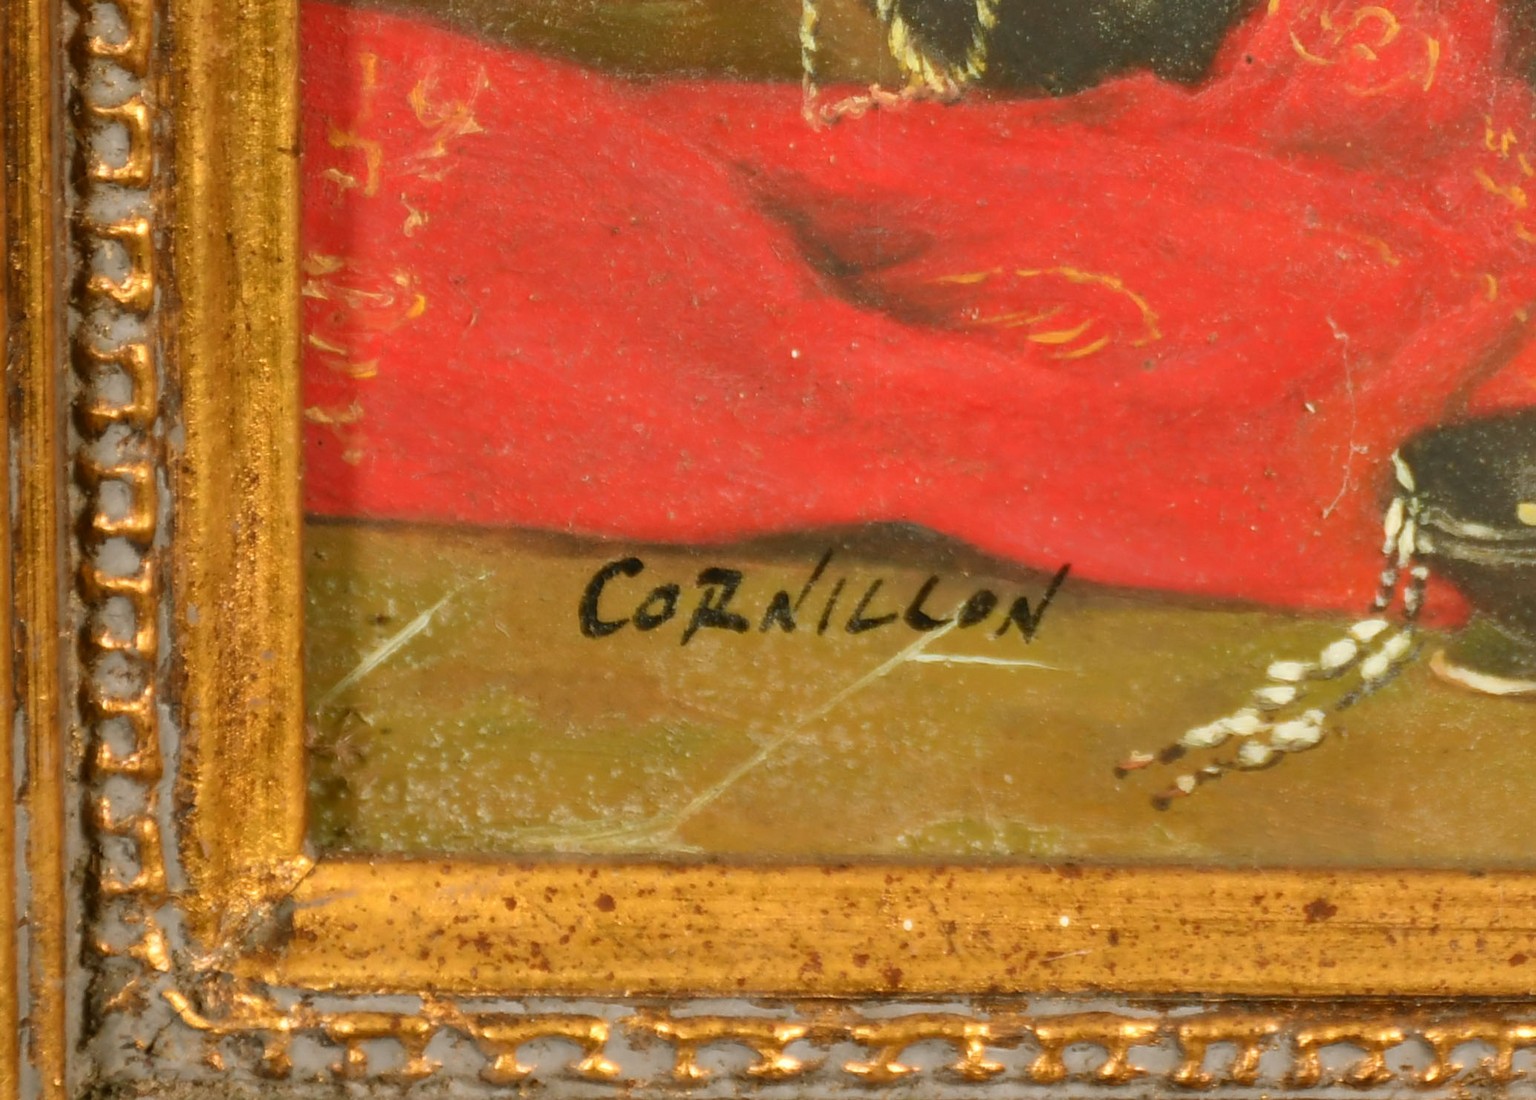 Cortillon, 20th Century, 'Le Fumeur de Pipe', oil on panel, signed, 15.75" x 11.75" (40 x 30cm). - Image 3 of 4